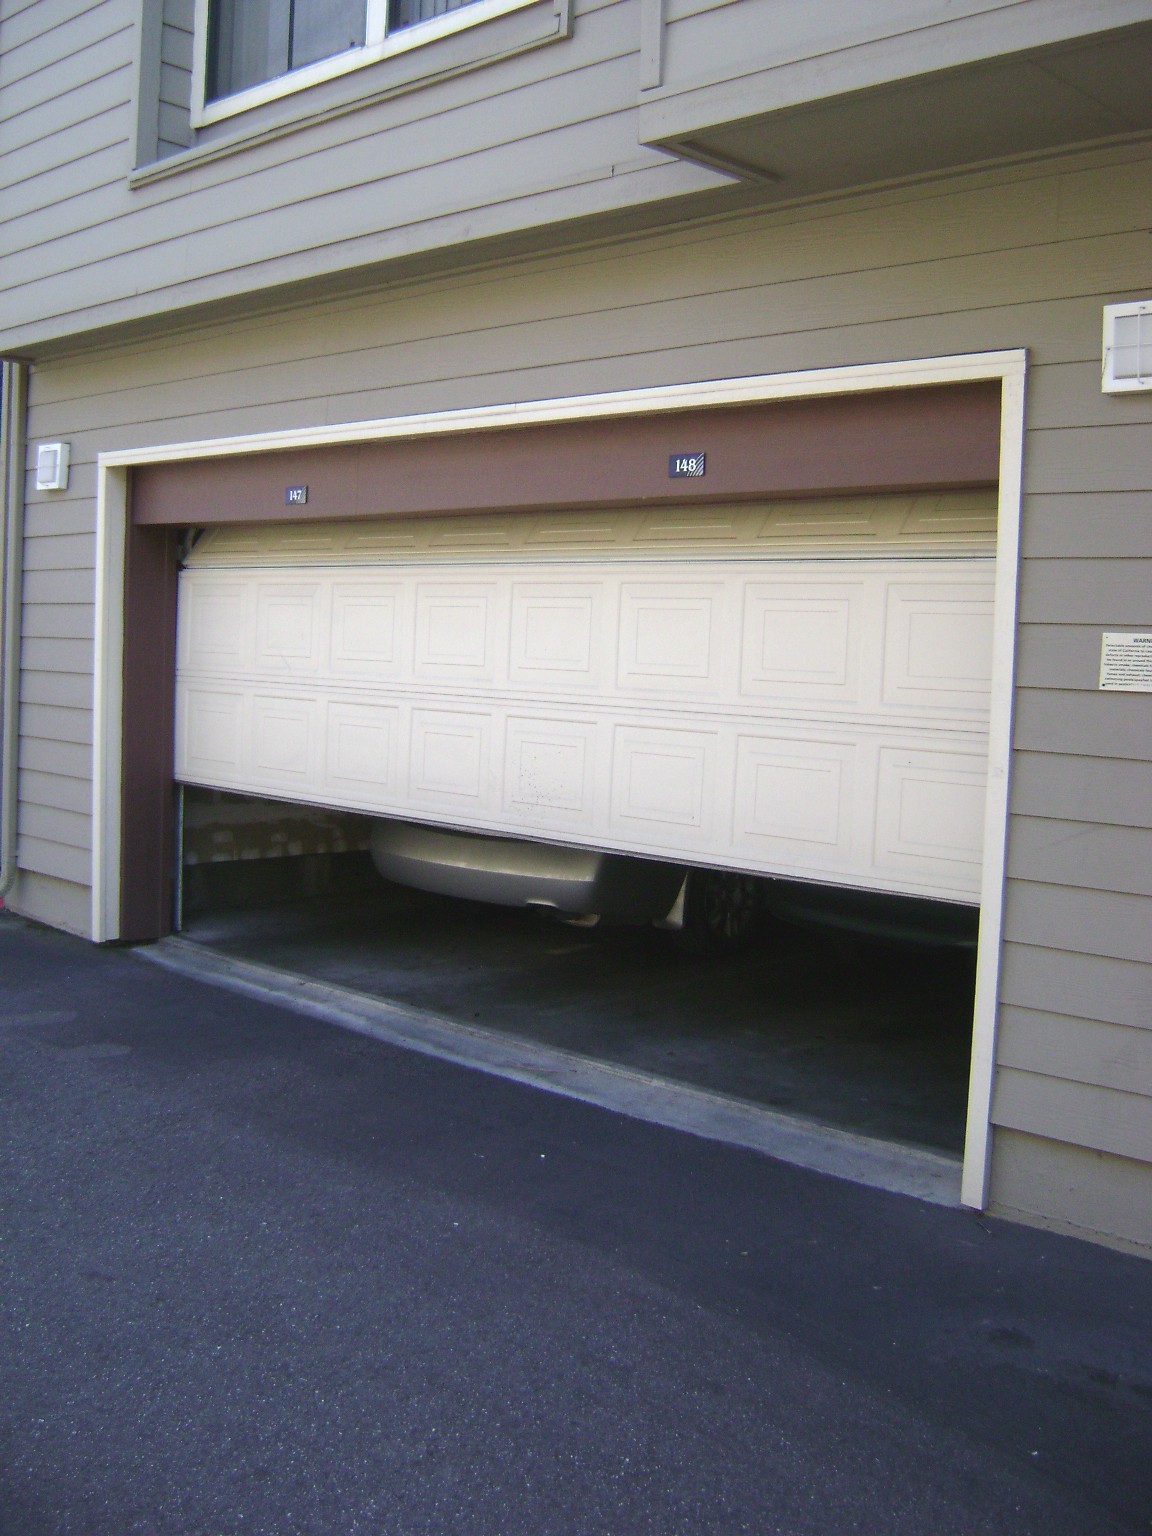 http://upload.wikimedia.org/wikipedia/commons/8/8d/Garage_door_sliding_up.jpg